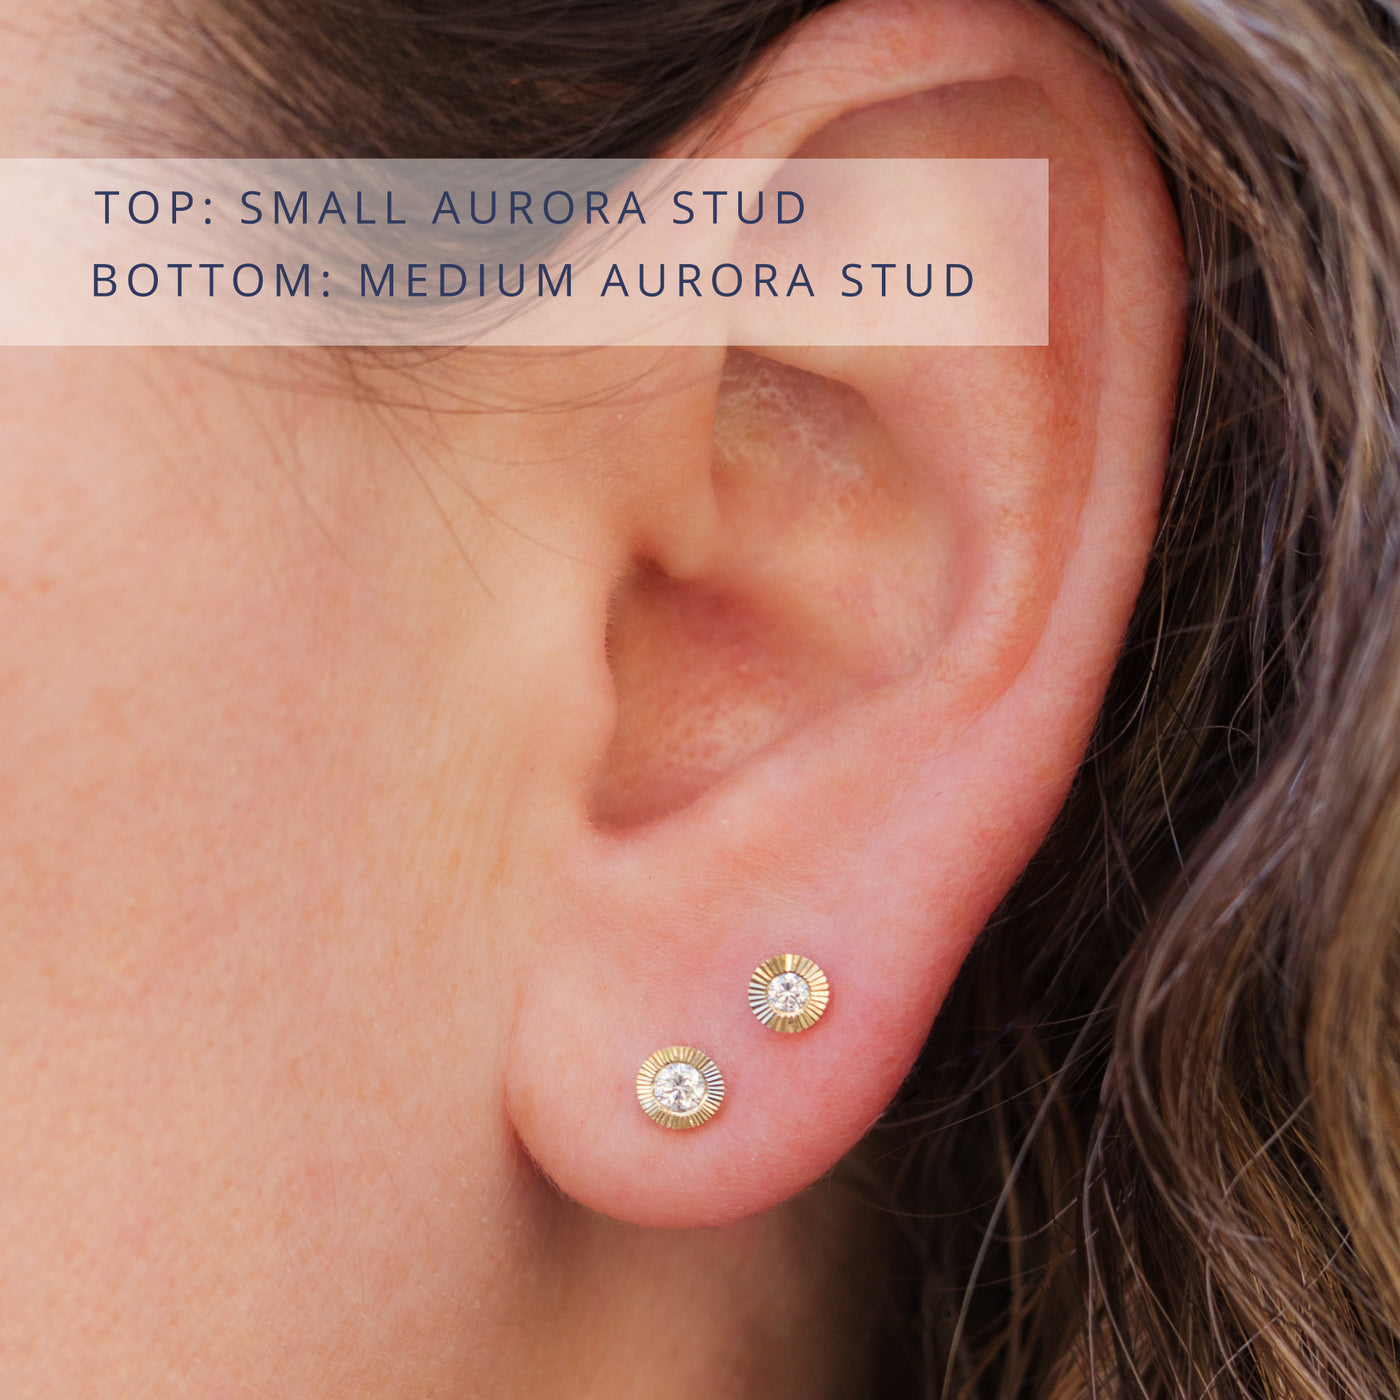 Aurora stud earrings on a model's ear. Top: 14k yellow gold small Aurora diamond studs, bottom: 14k yellow gold Medium Aurora diamond studs